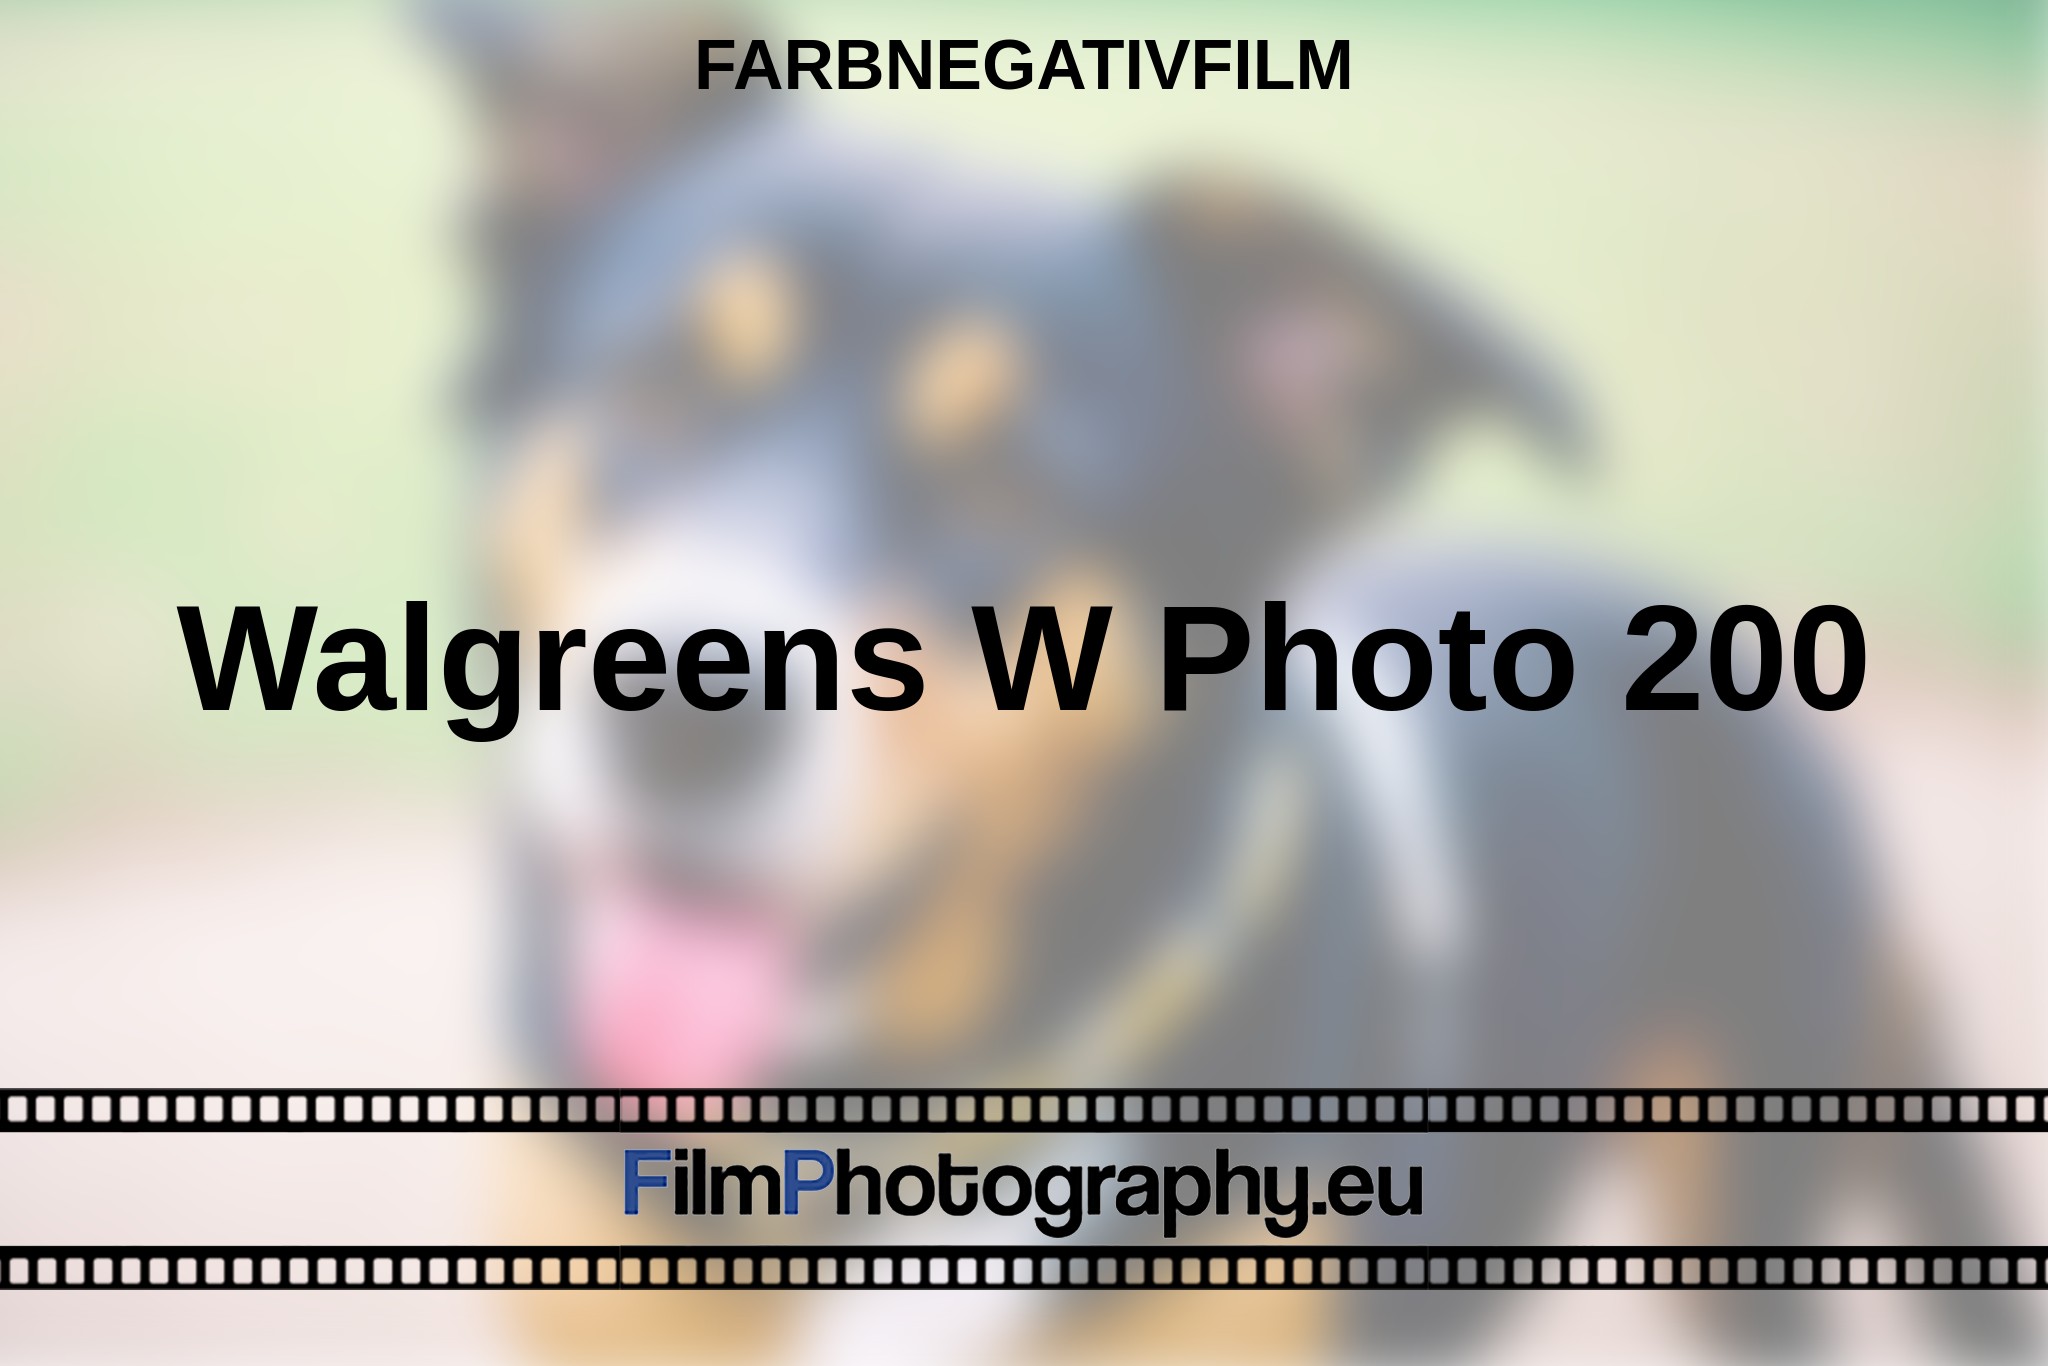 walgreens-w-photo-200-farbnegativfilm-bnv.jpg